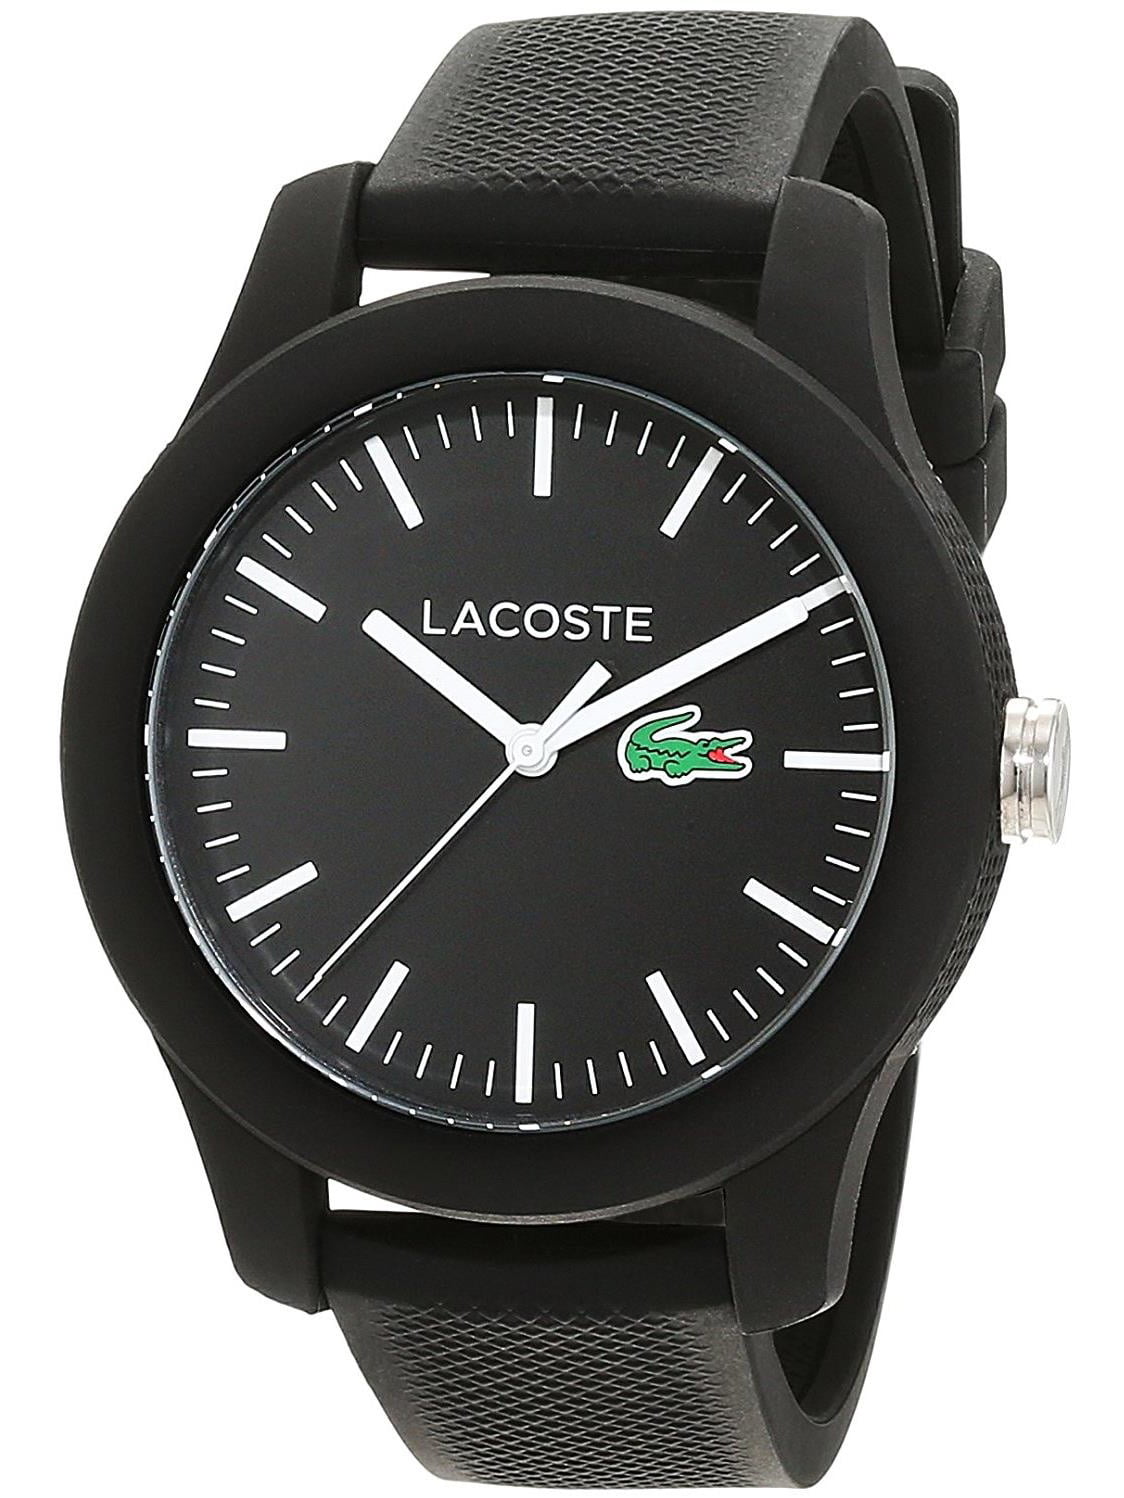 Lacoste Watches - Walmart.com